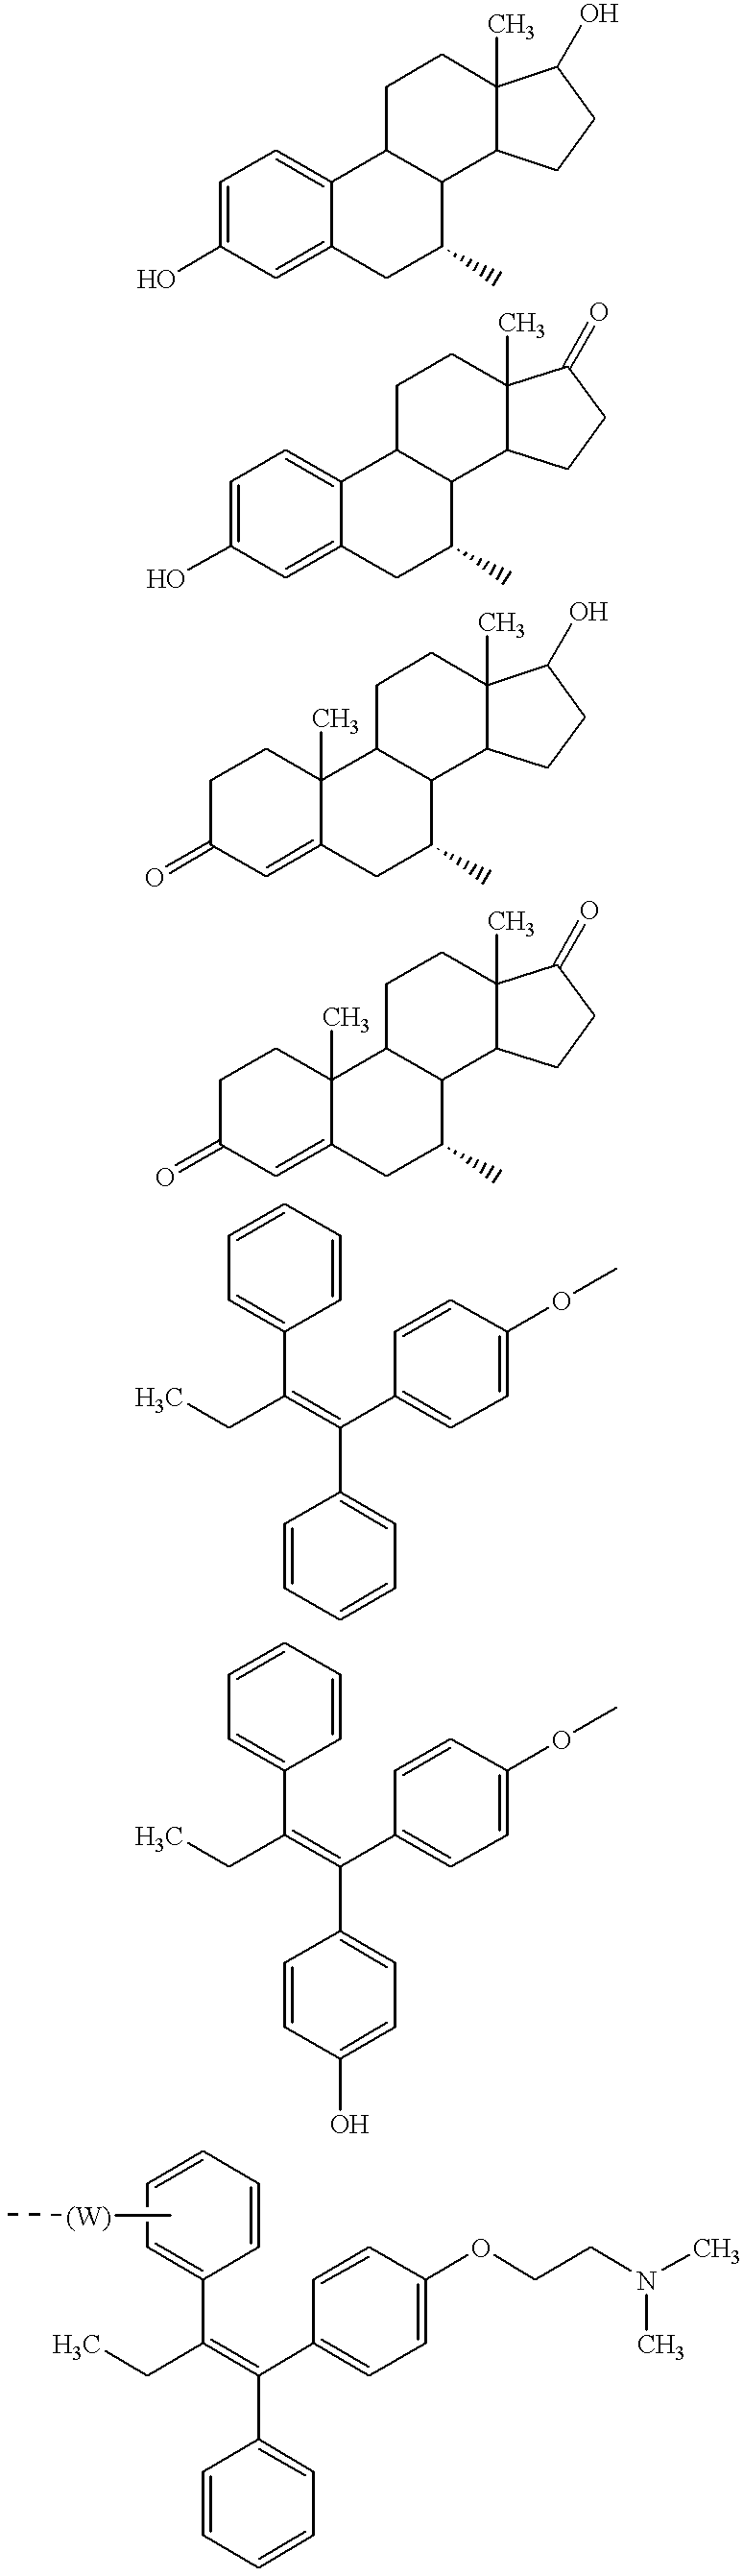 Uses of novel organoselenium compounds with pro-oxidant activity